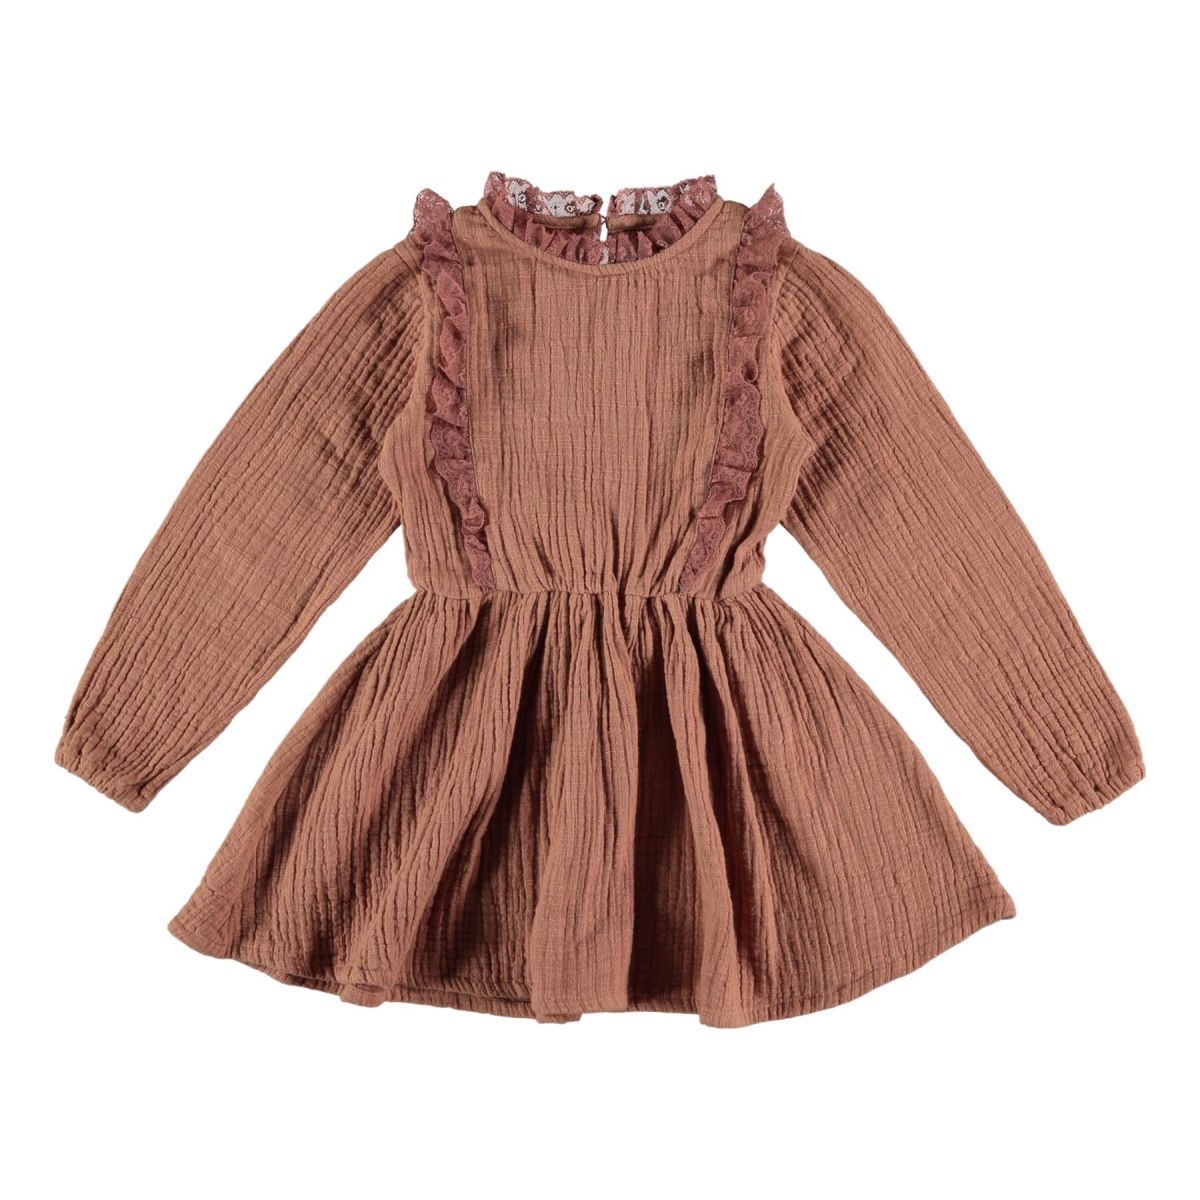 Tocoto Vintage Sukienka Lace Różowa W31820PINK 